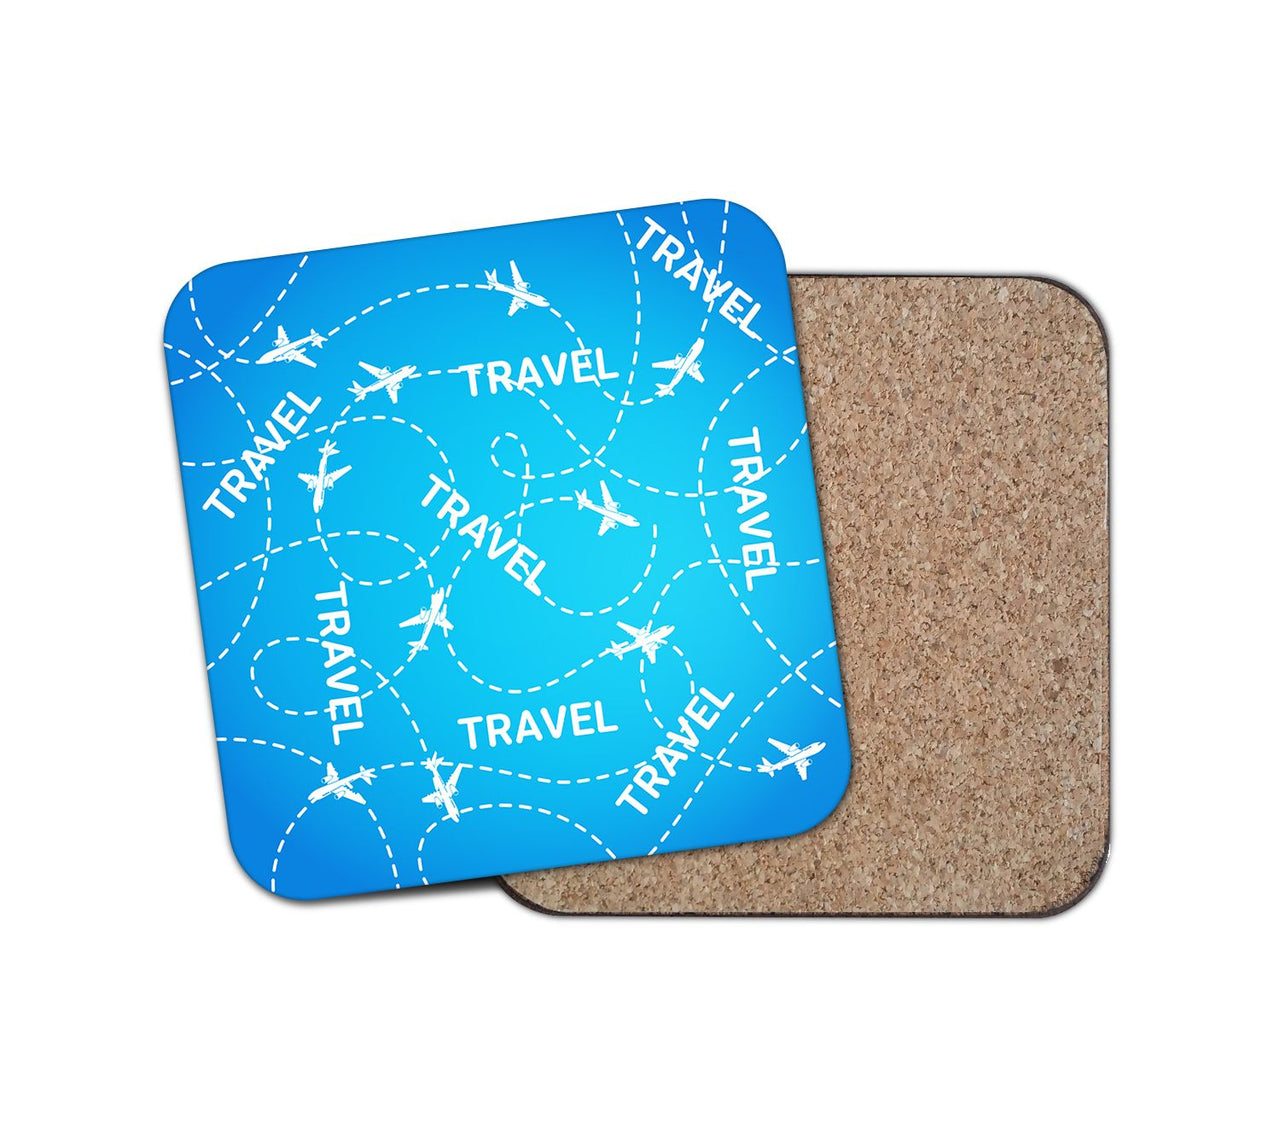 Travel & Planes Designed Coasters